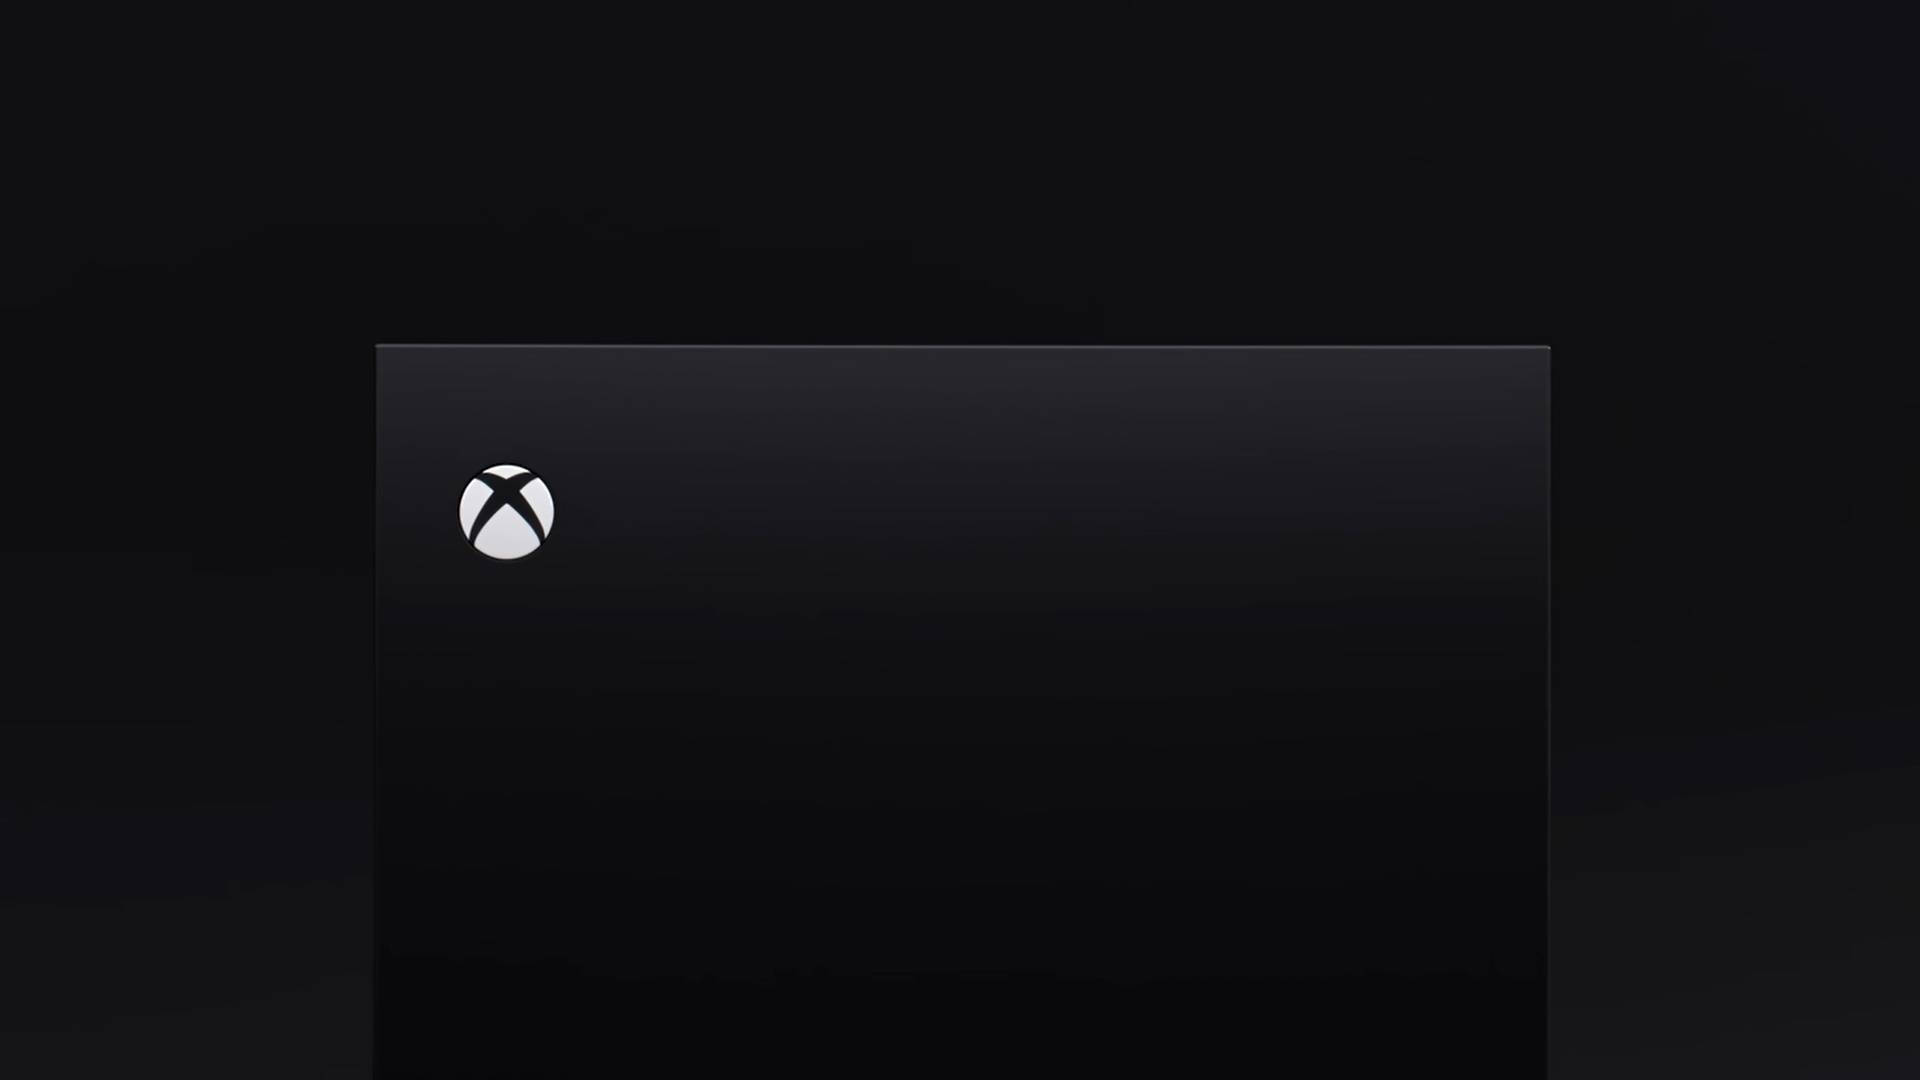 Xbox Series X Minimalist Black Background